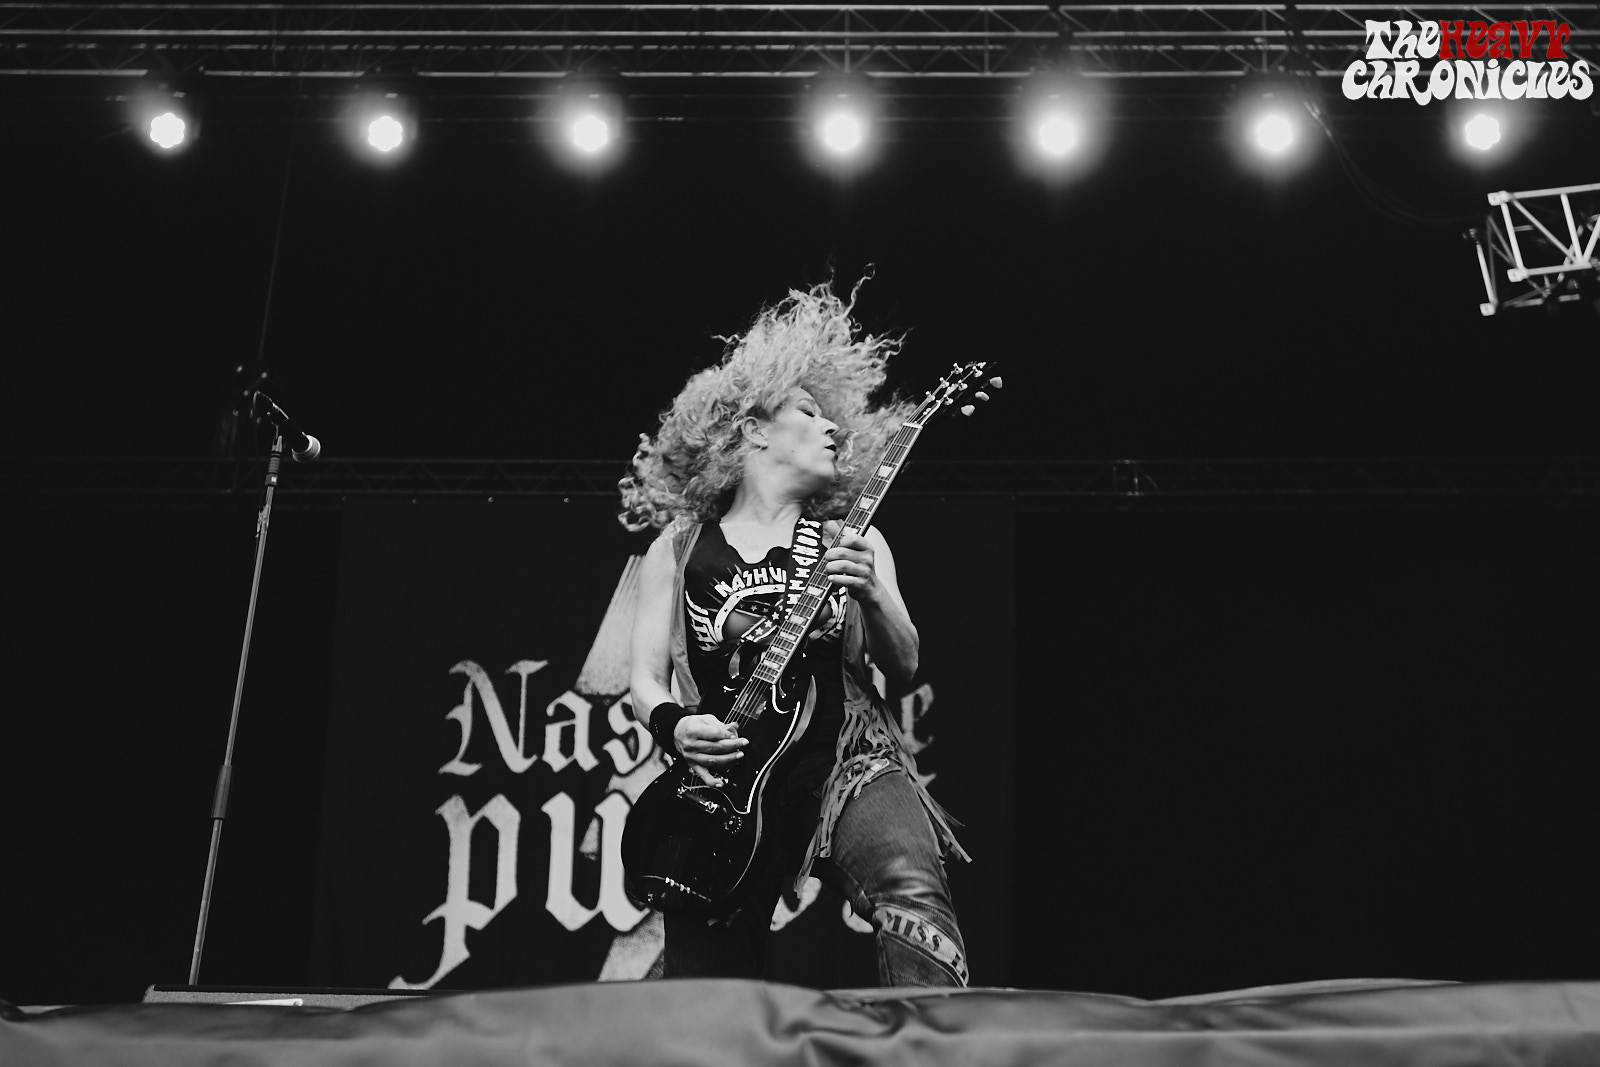 Hellfest_Nashville Pussy_Vendredi